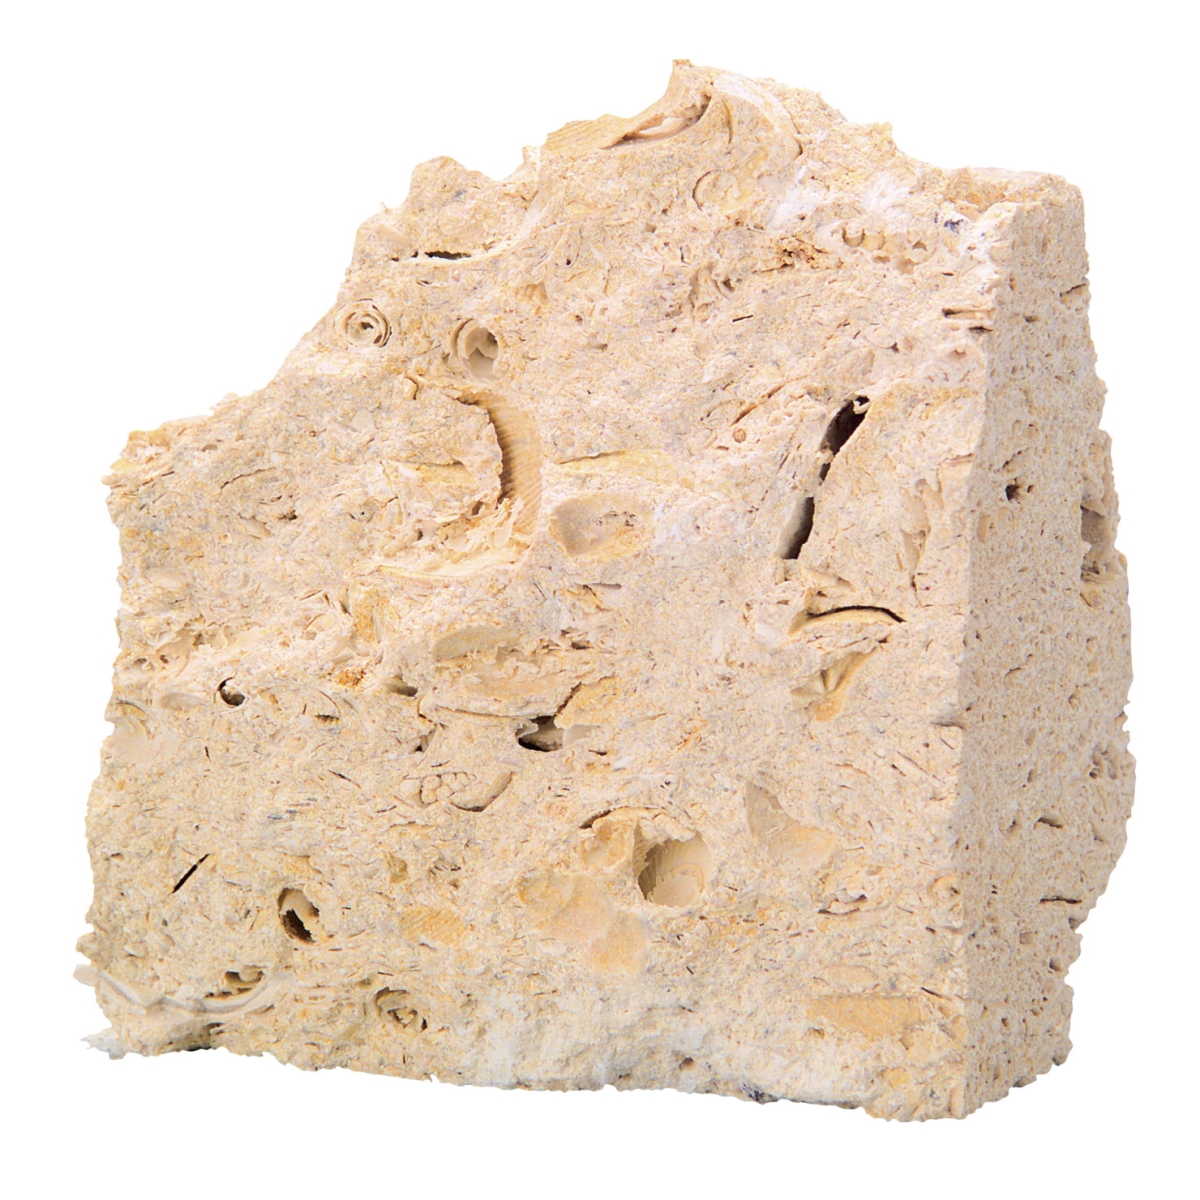 586603 Scott Resources Student Buff Fossiliferous Limestone - Pack Of 10